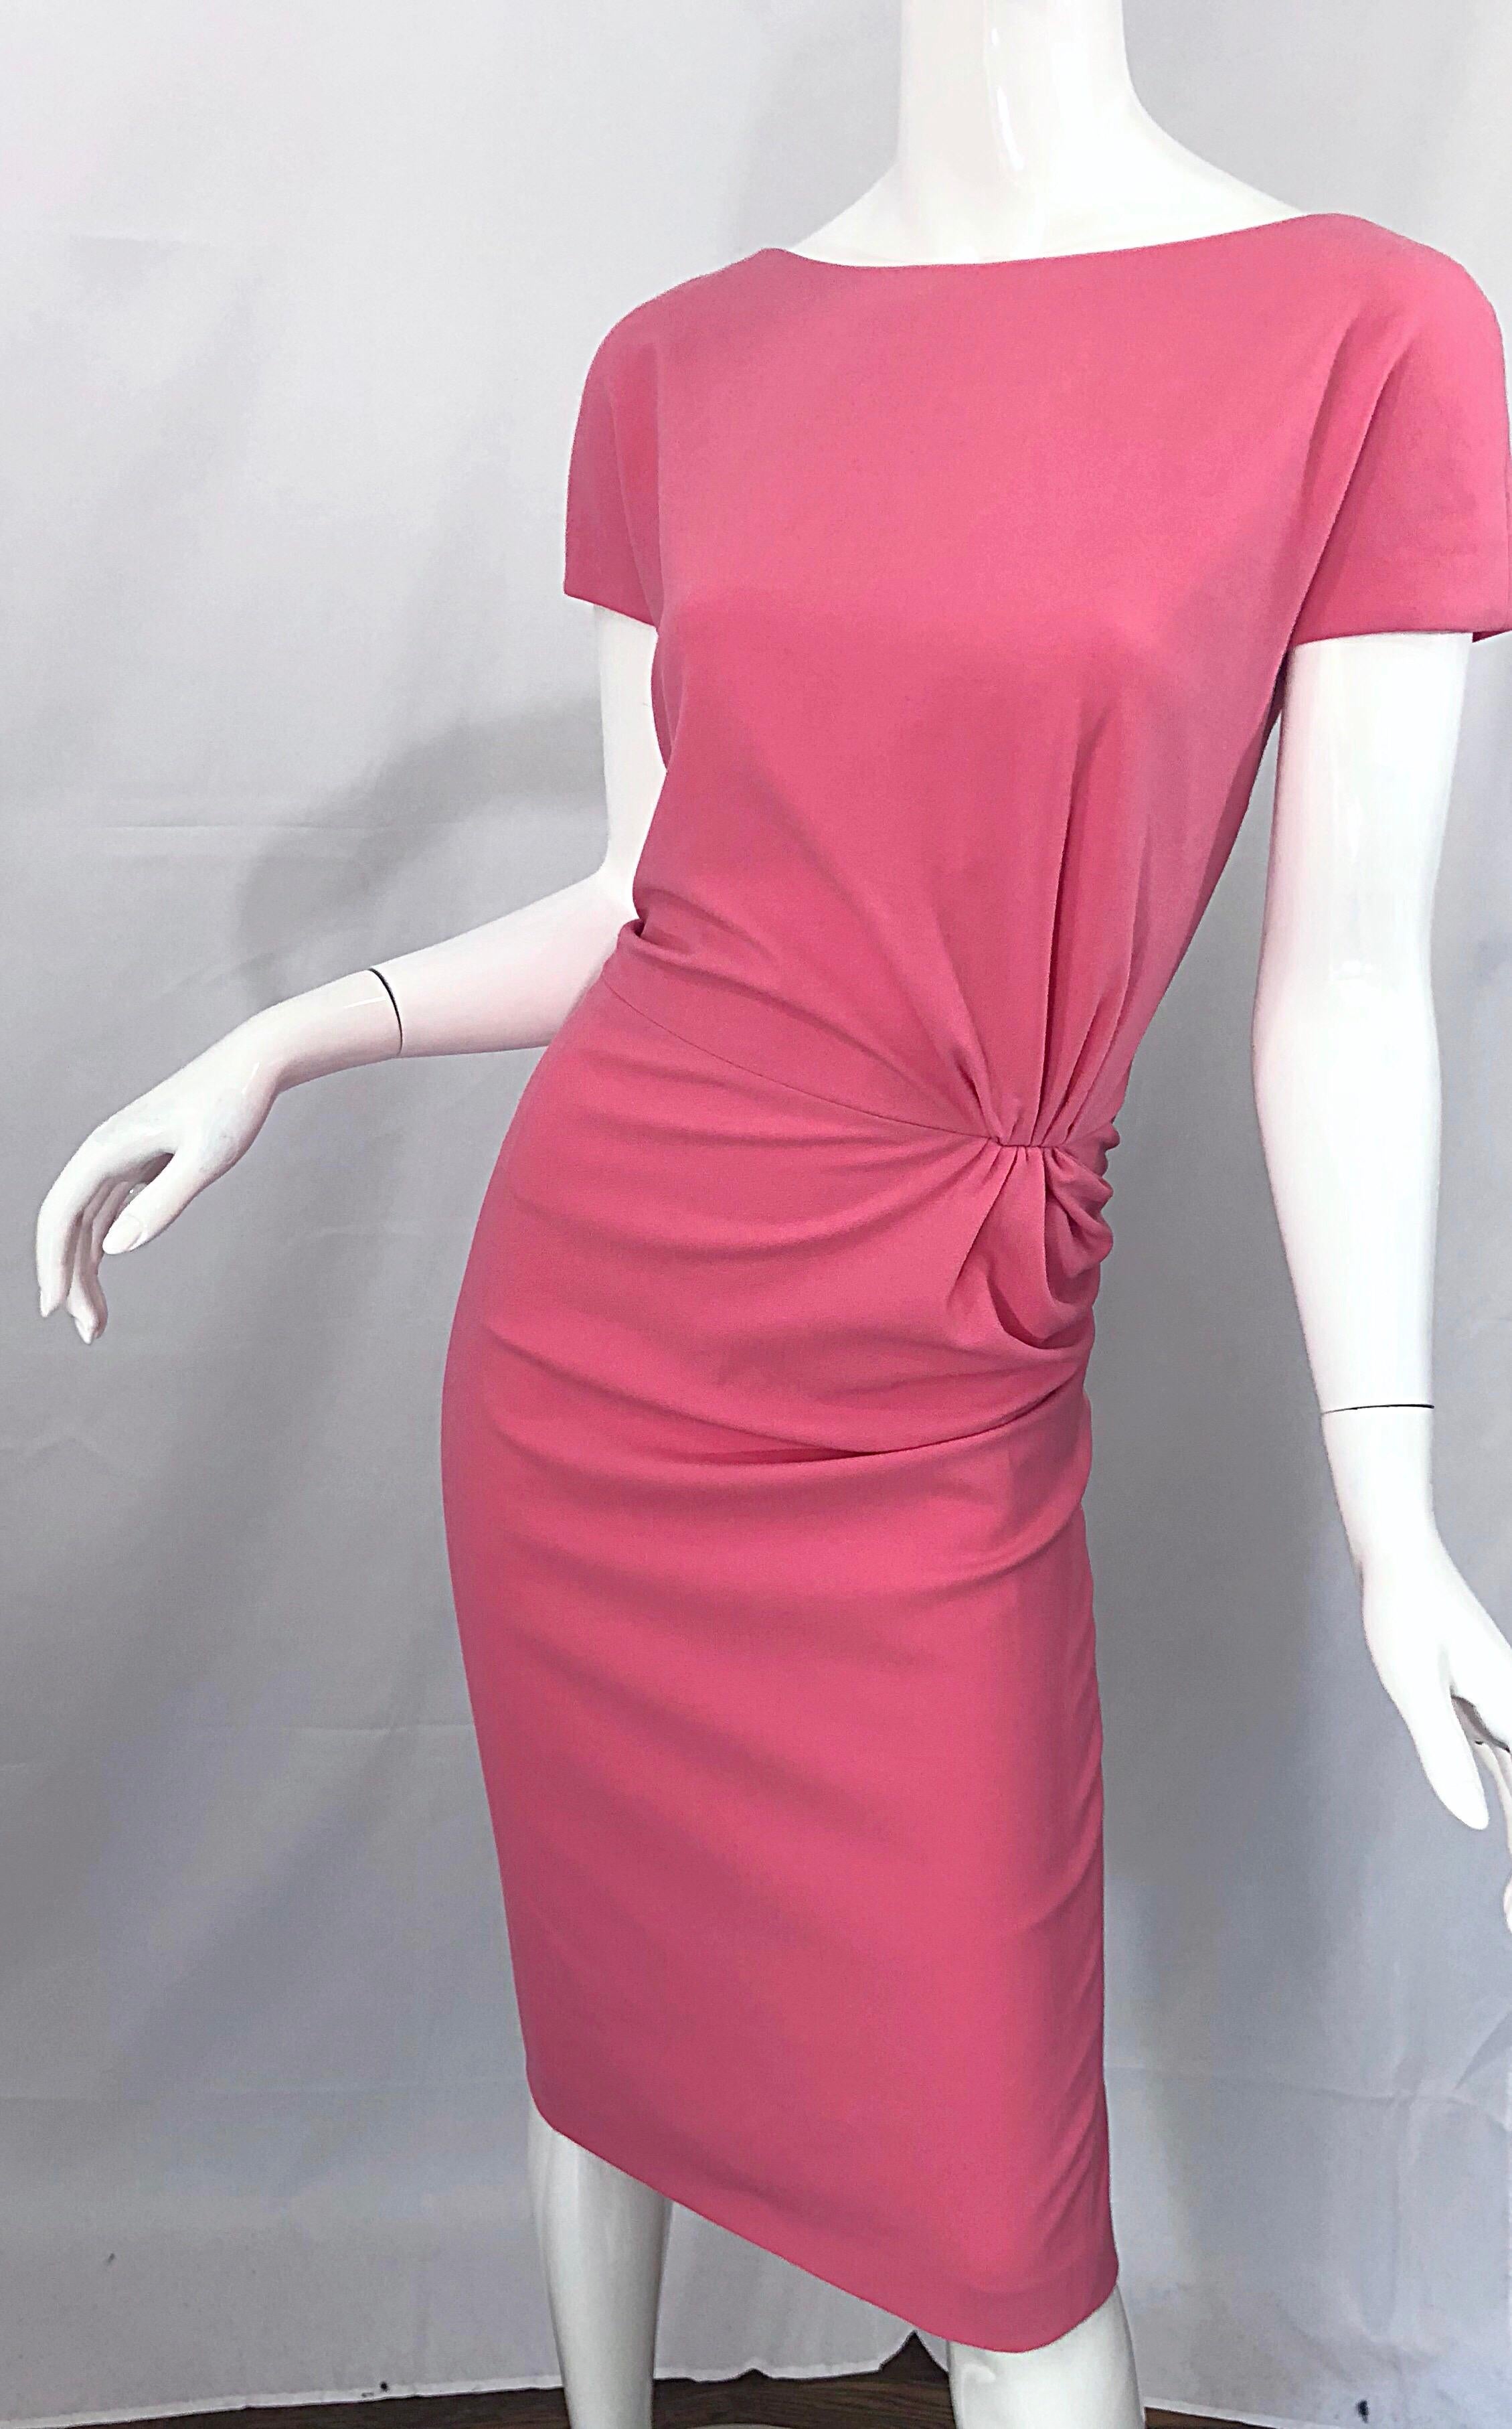 flattering pink dress